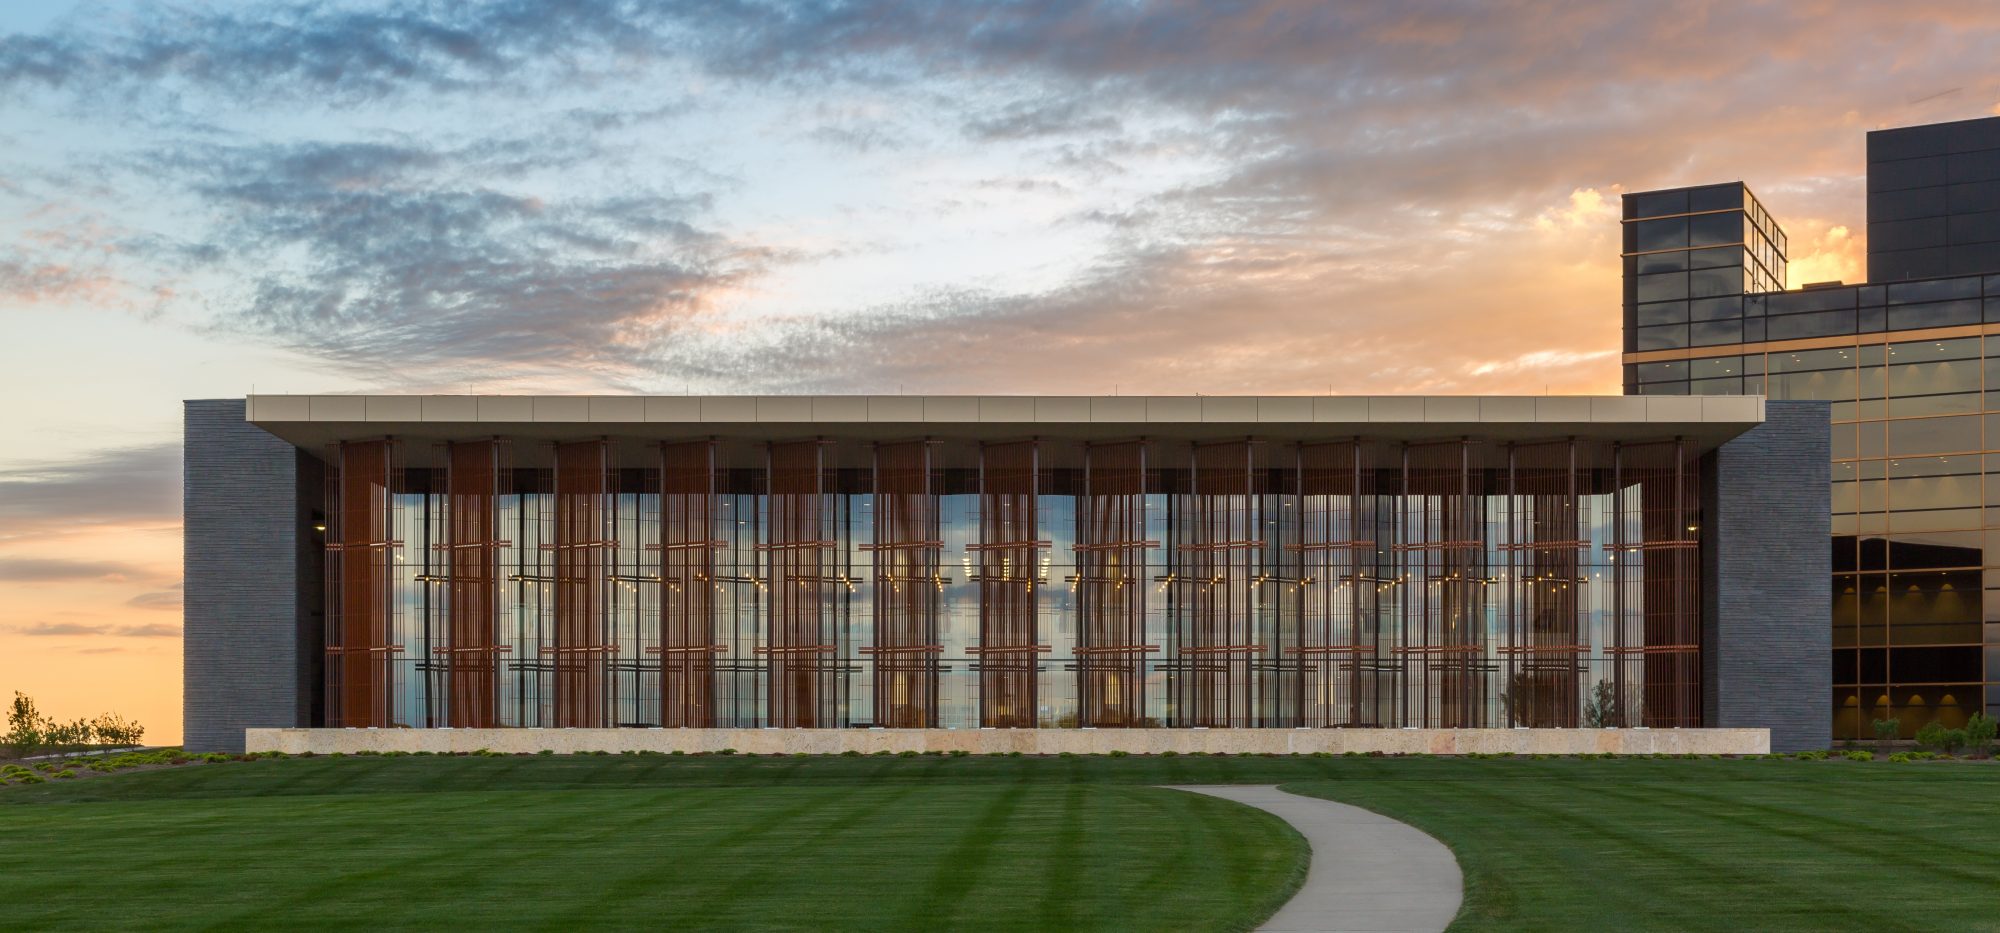 Wells Fargo West Des Moines Campus - SVPA Architects